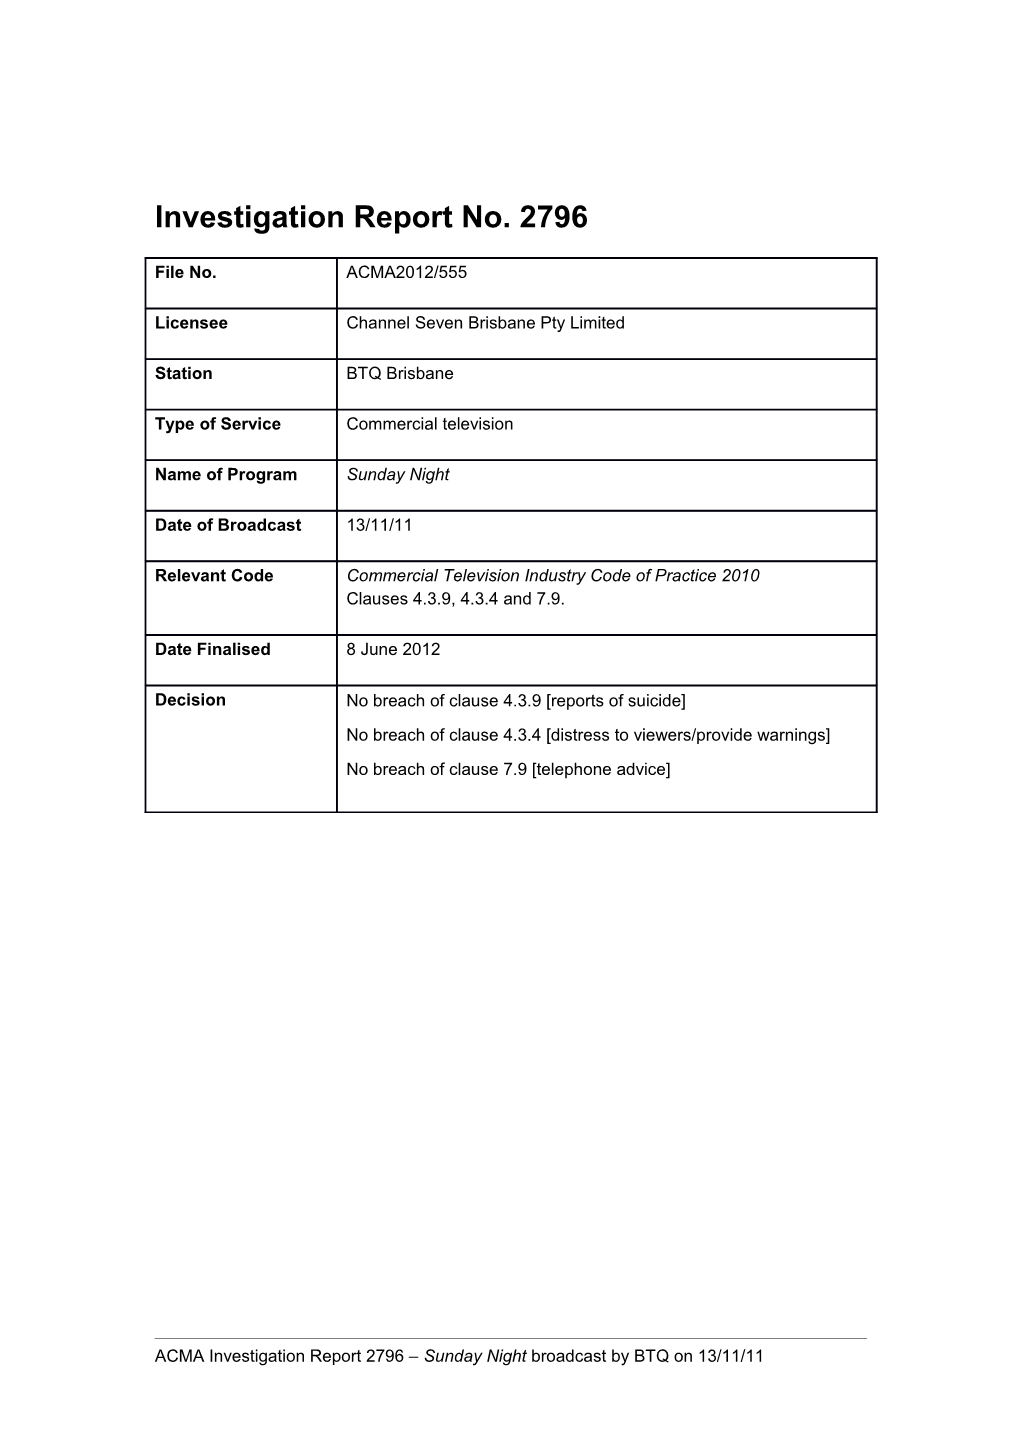 BTQ Brisbane - ACMA Investigation Report 2796